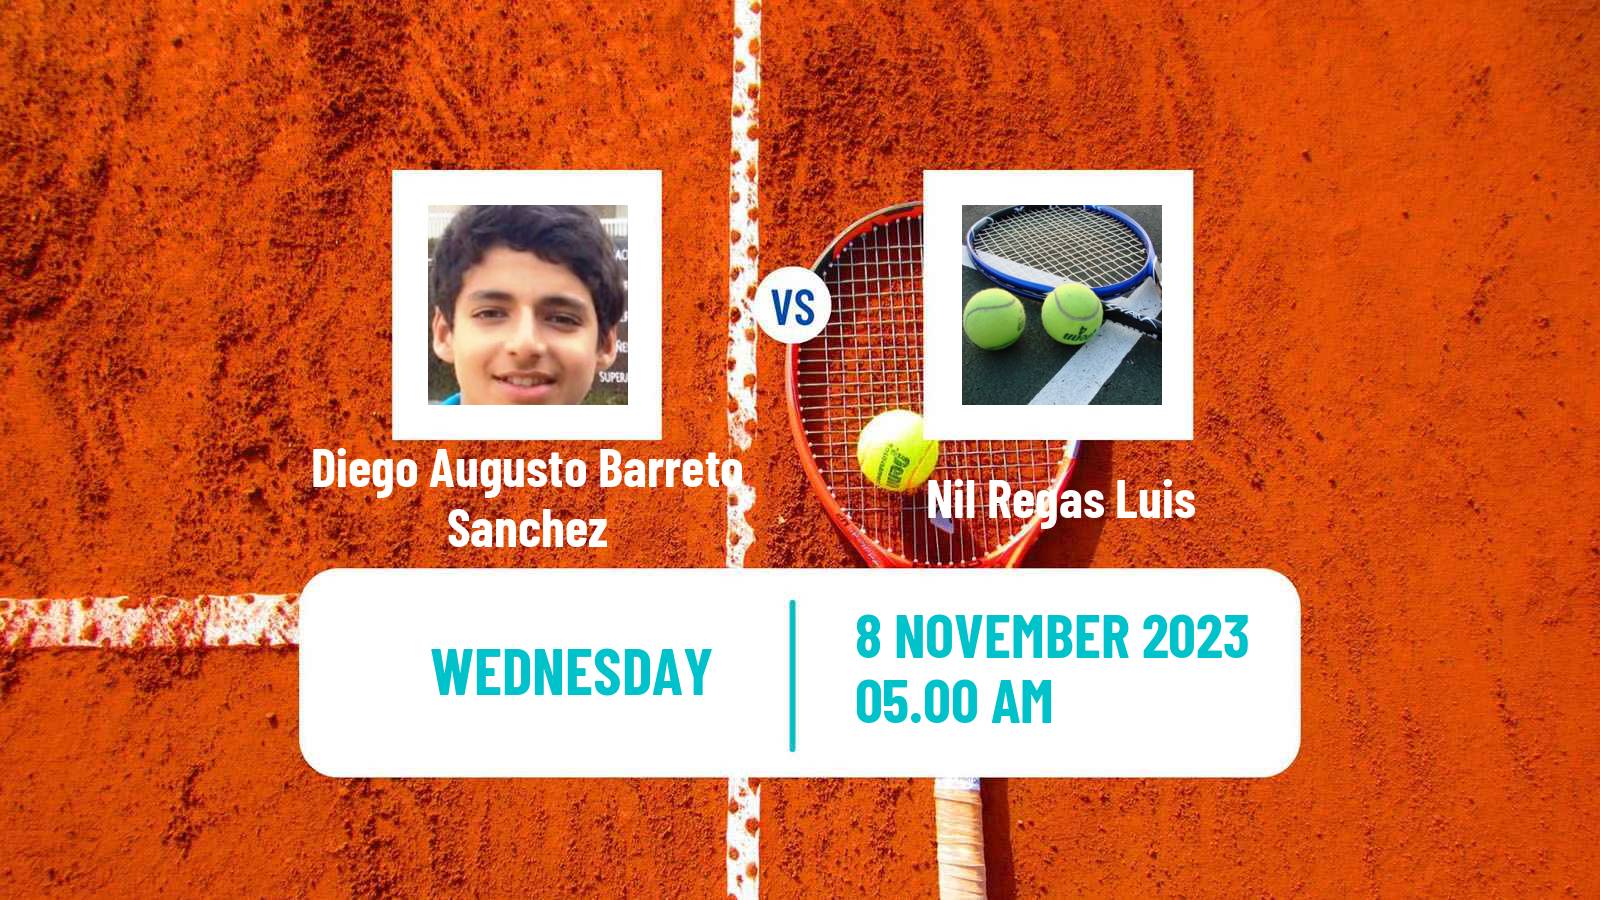 Tennis ITF M25 Benicarlo Men Diego Augusto Barreto Sanchez - Nil Regas Luis